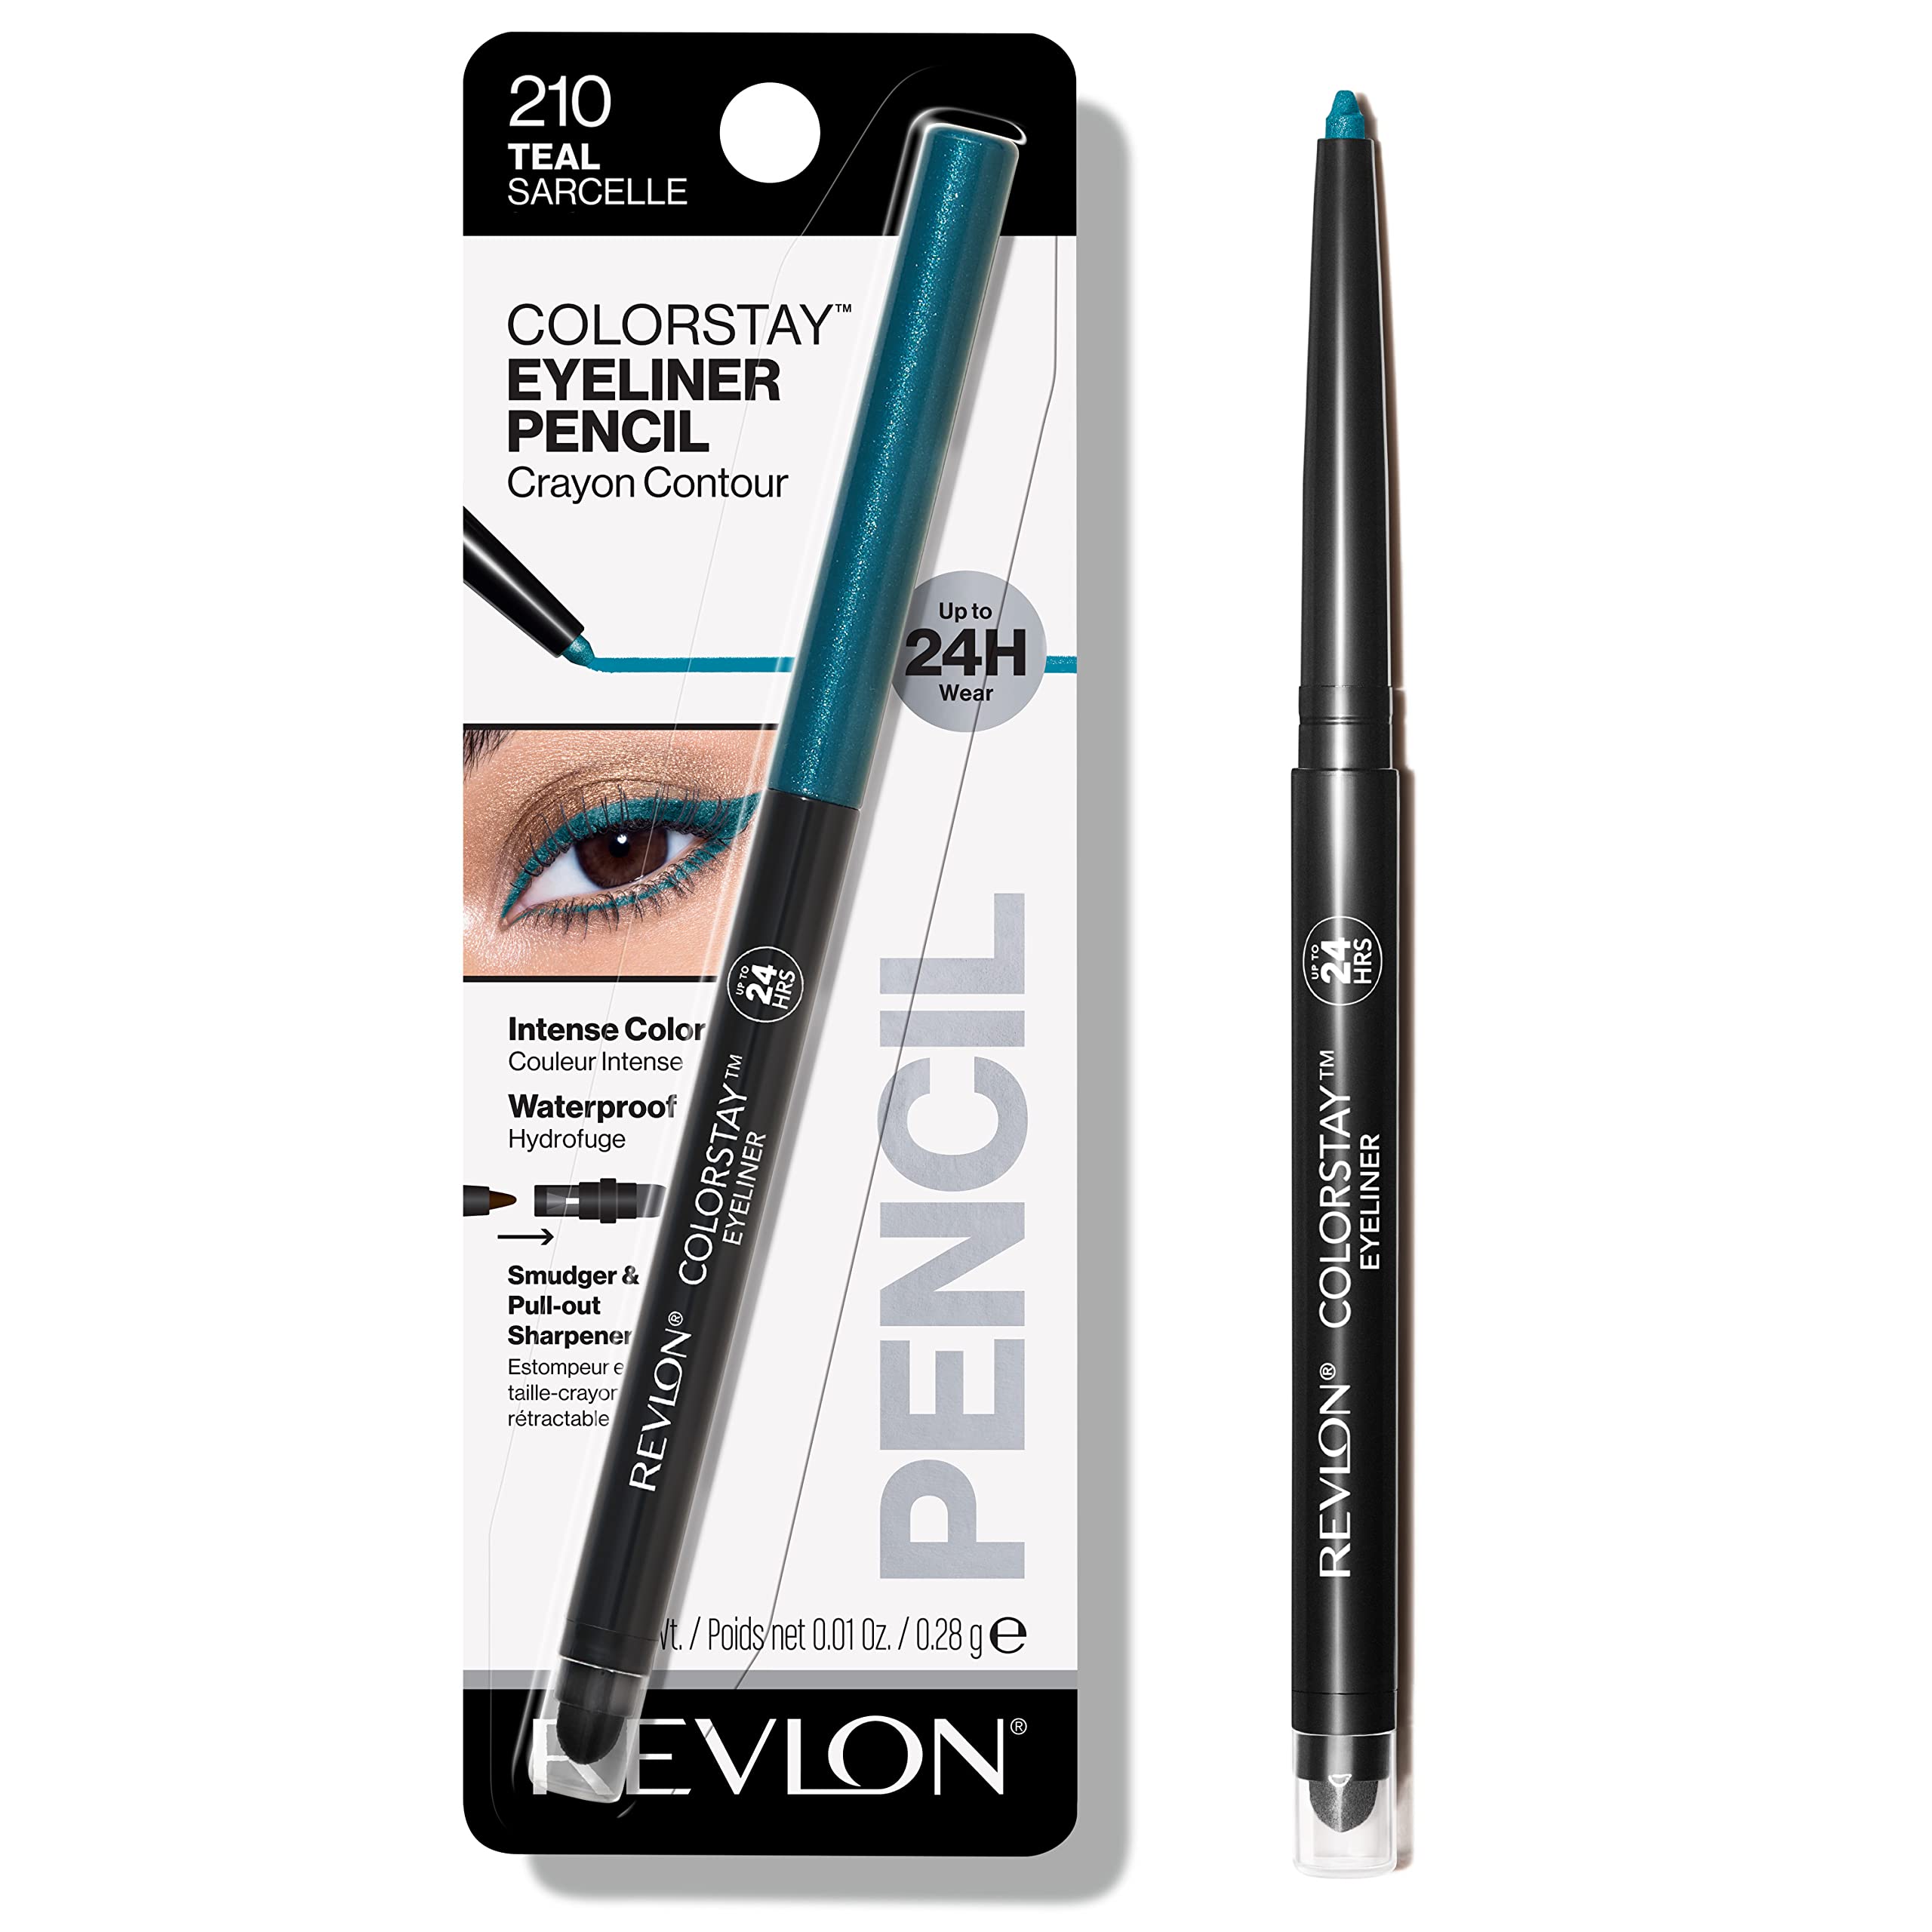 Pencil Eyeliner by Revlon, ColorStay Eye Makeup with Built-in Sharpener, Waterproof, Smudgeproof, Longwearing with Ultra-Fine Tip, 210 Teal, 0.01 Oz